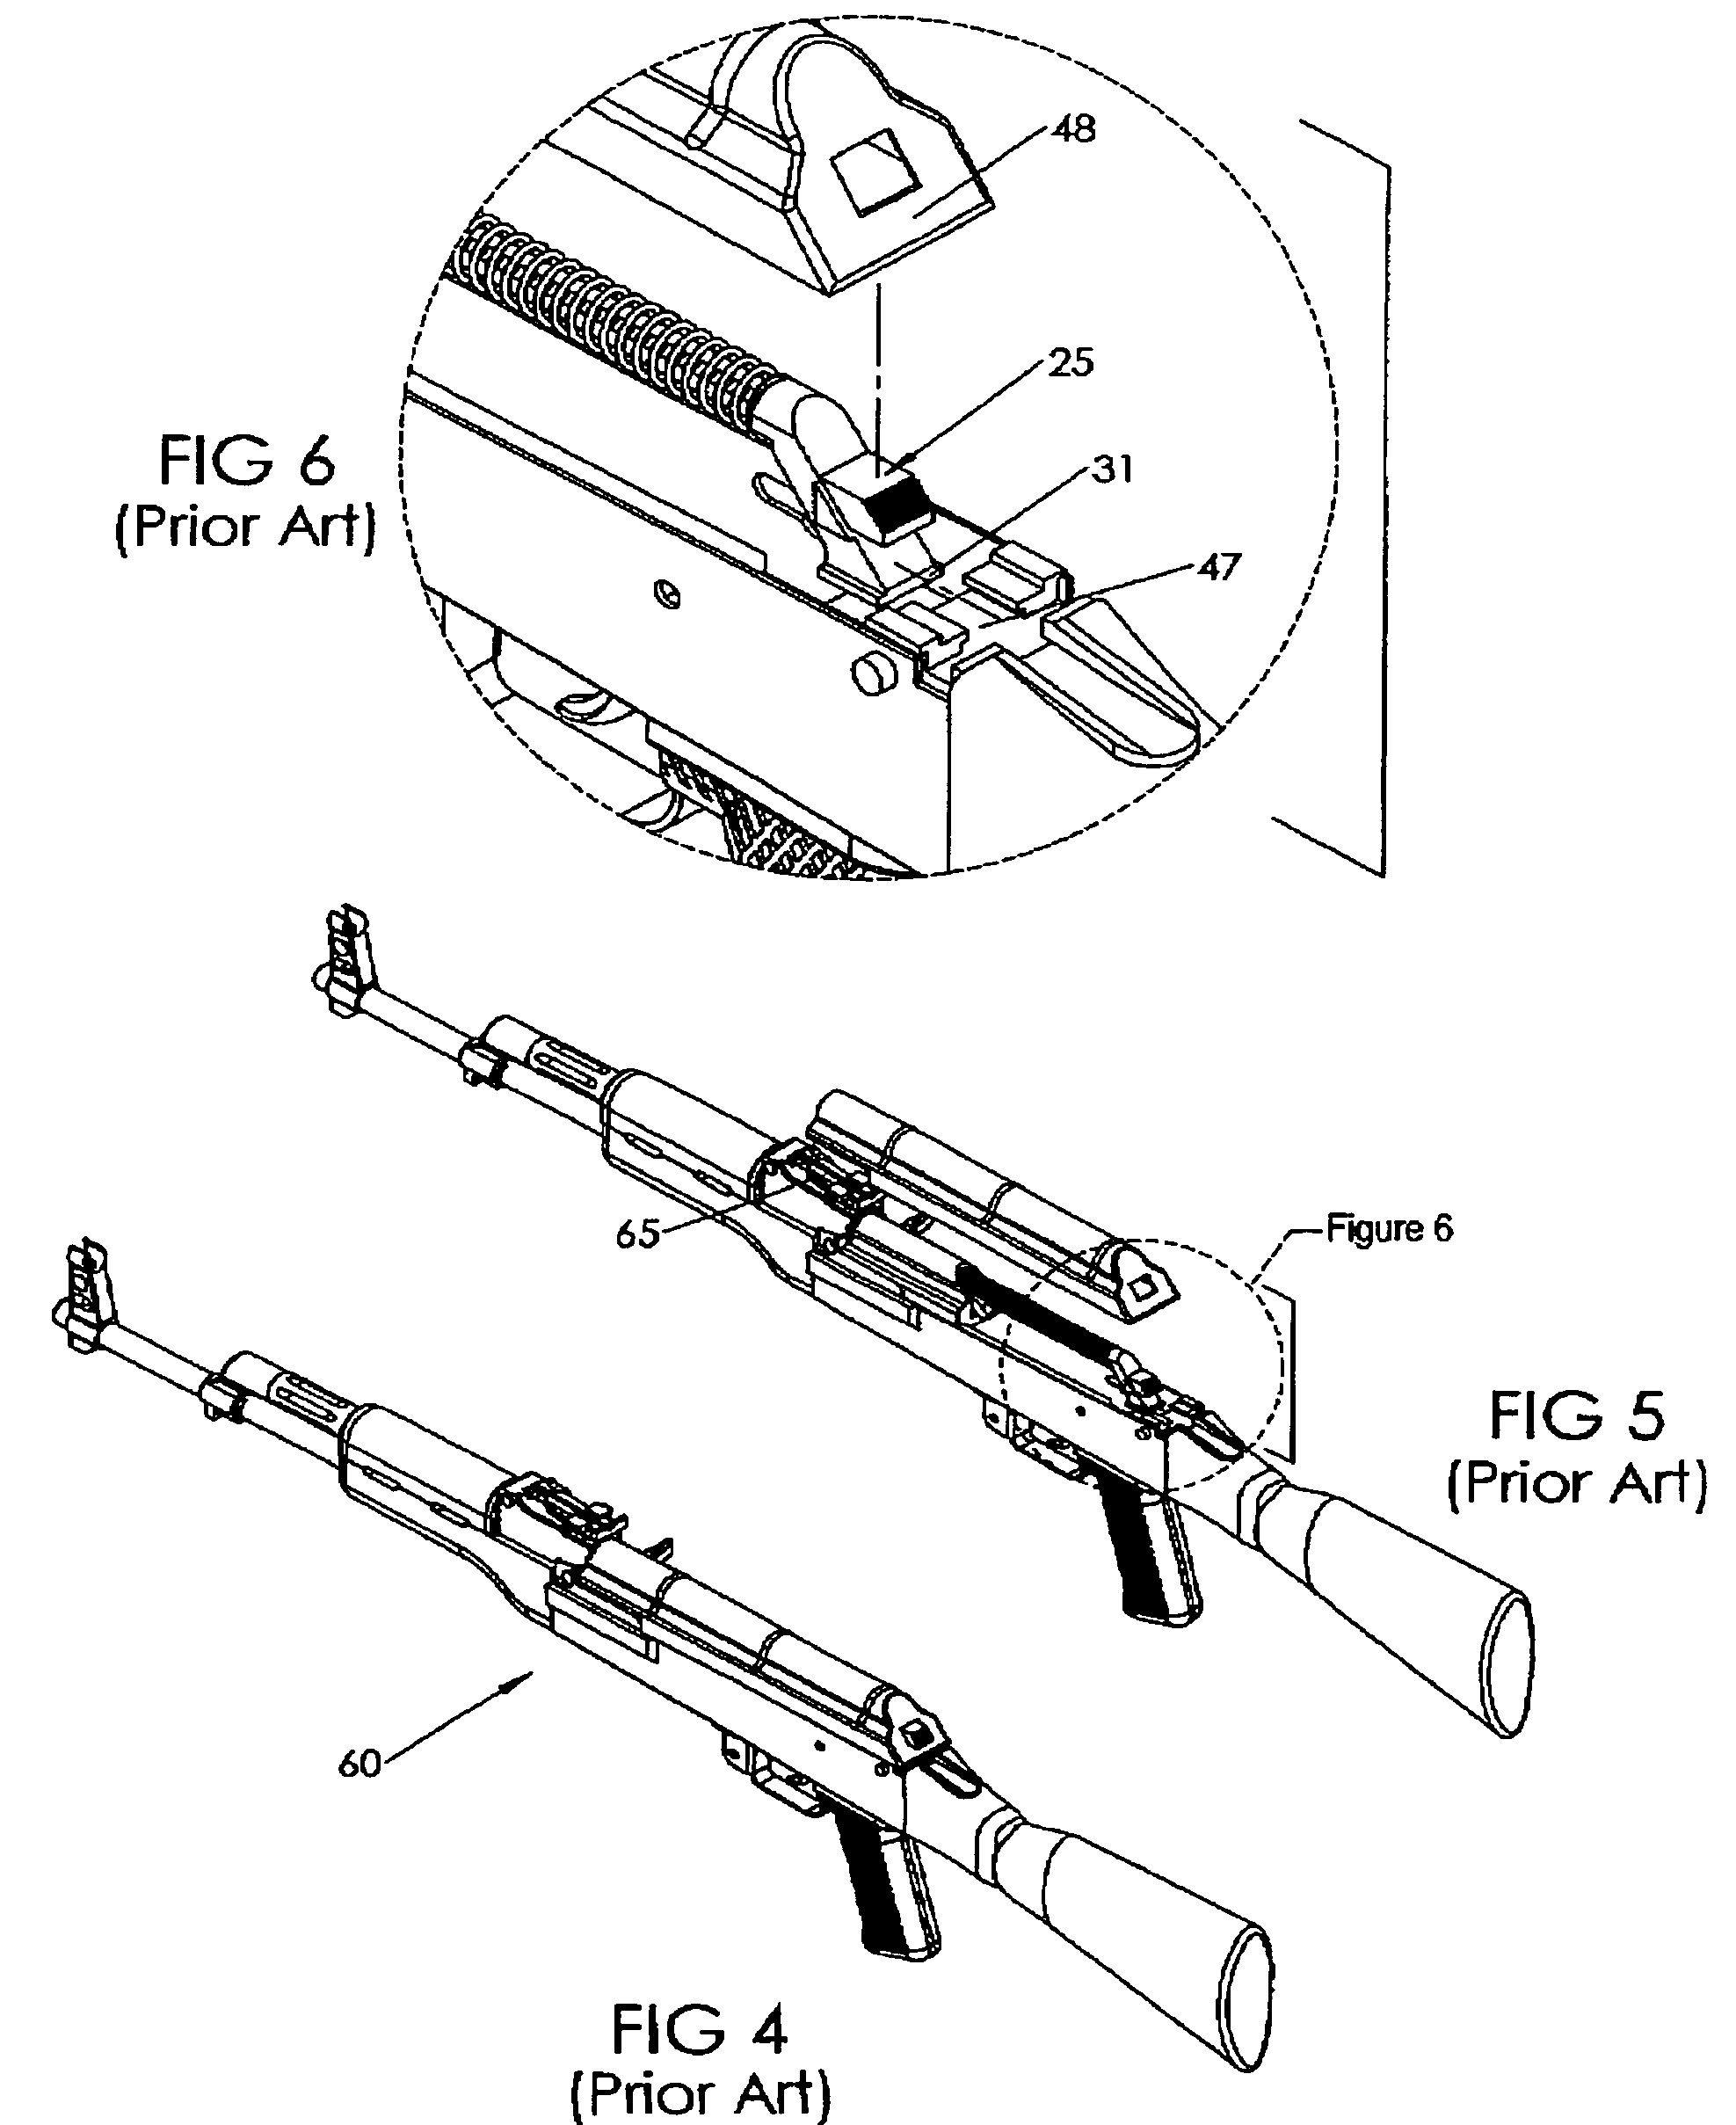 Rear gun sight device for AK47 or similar rifle